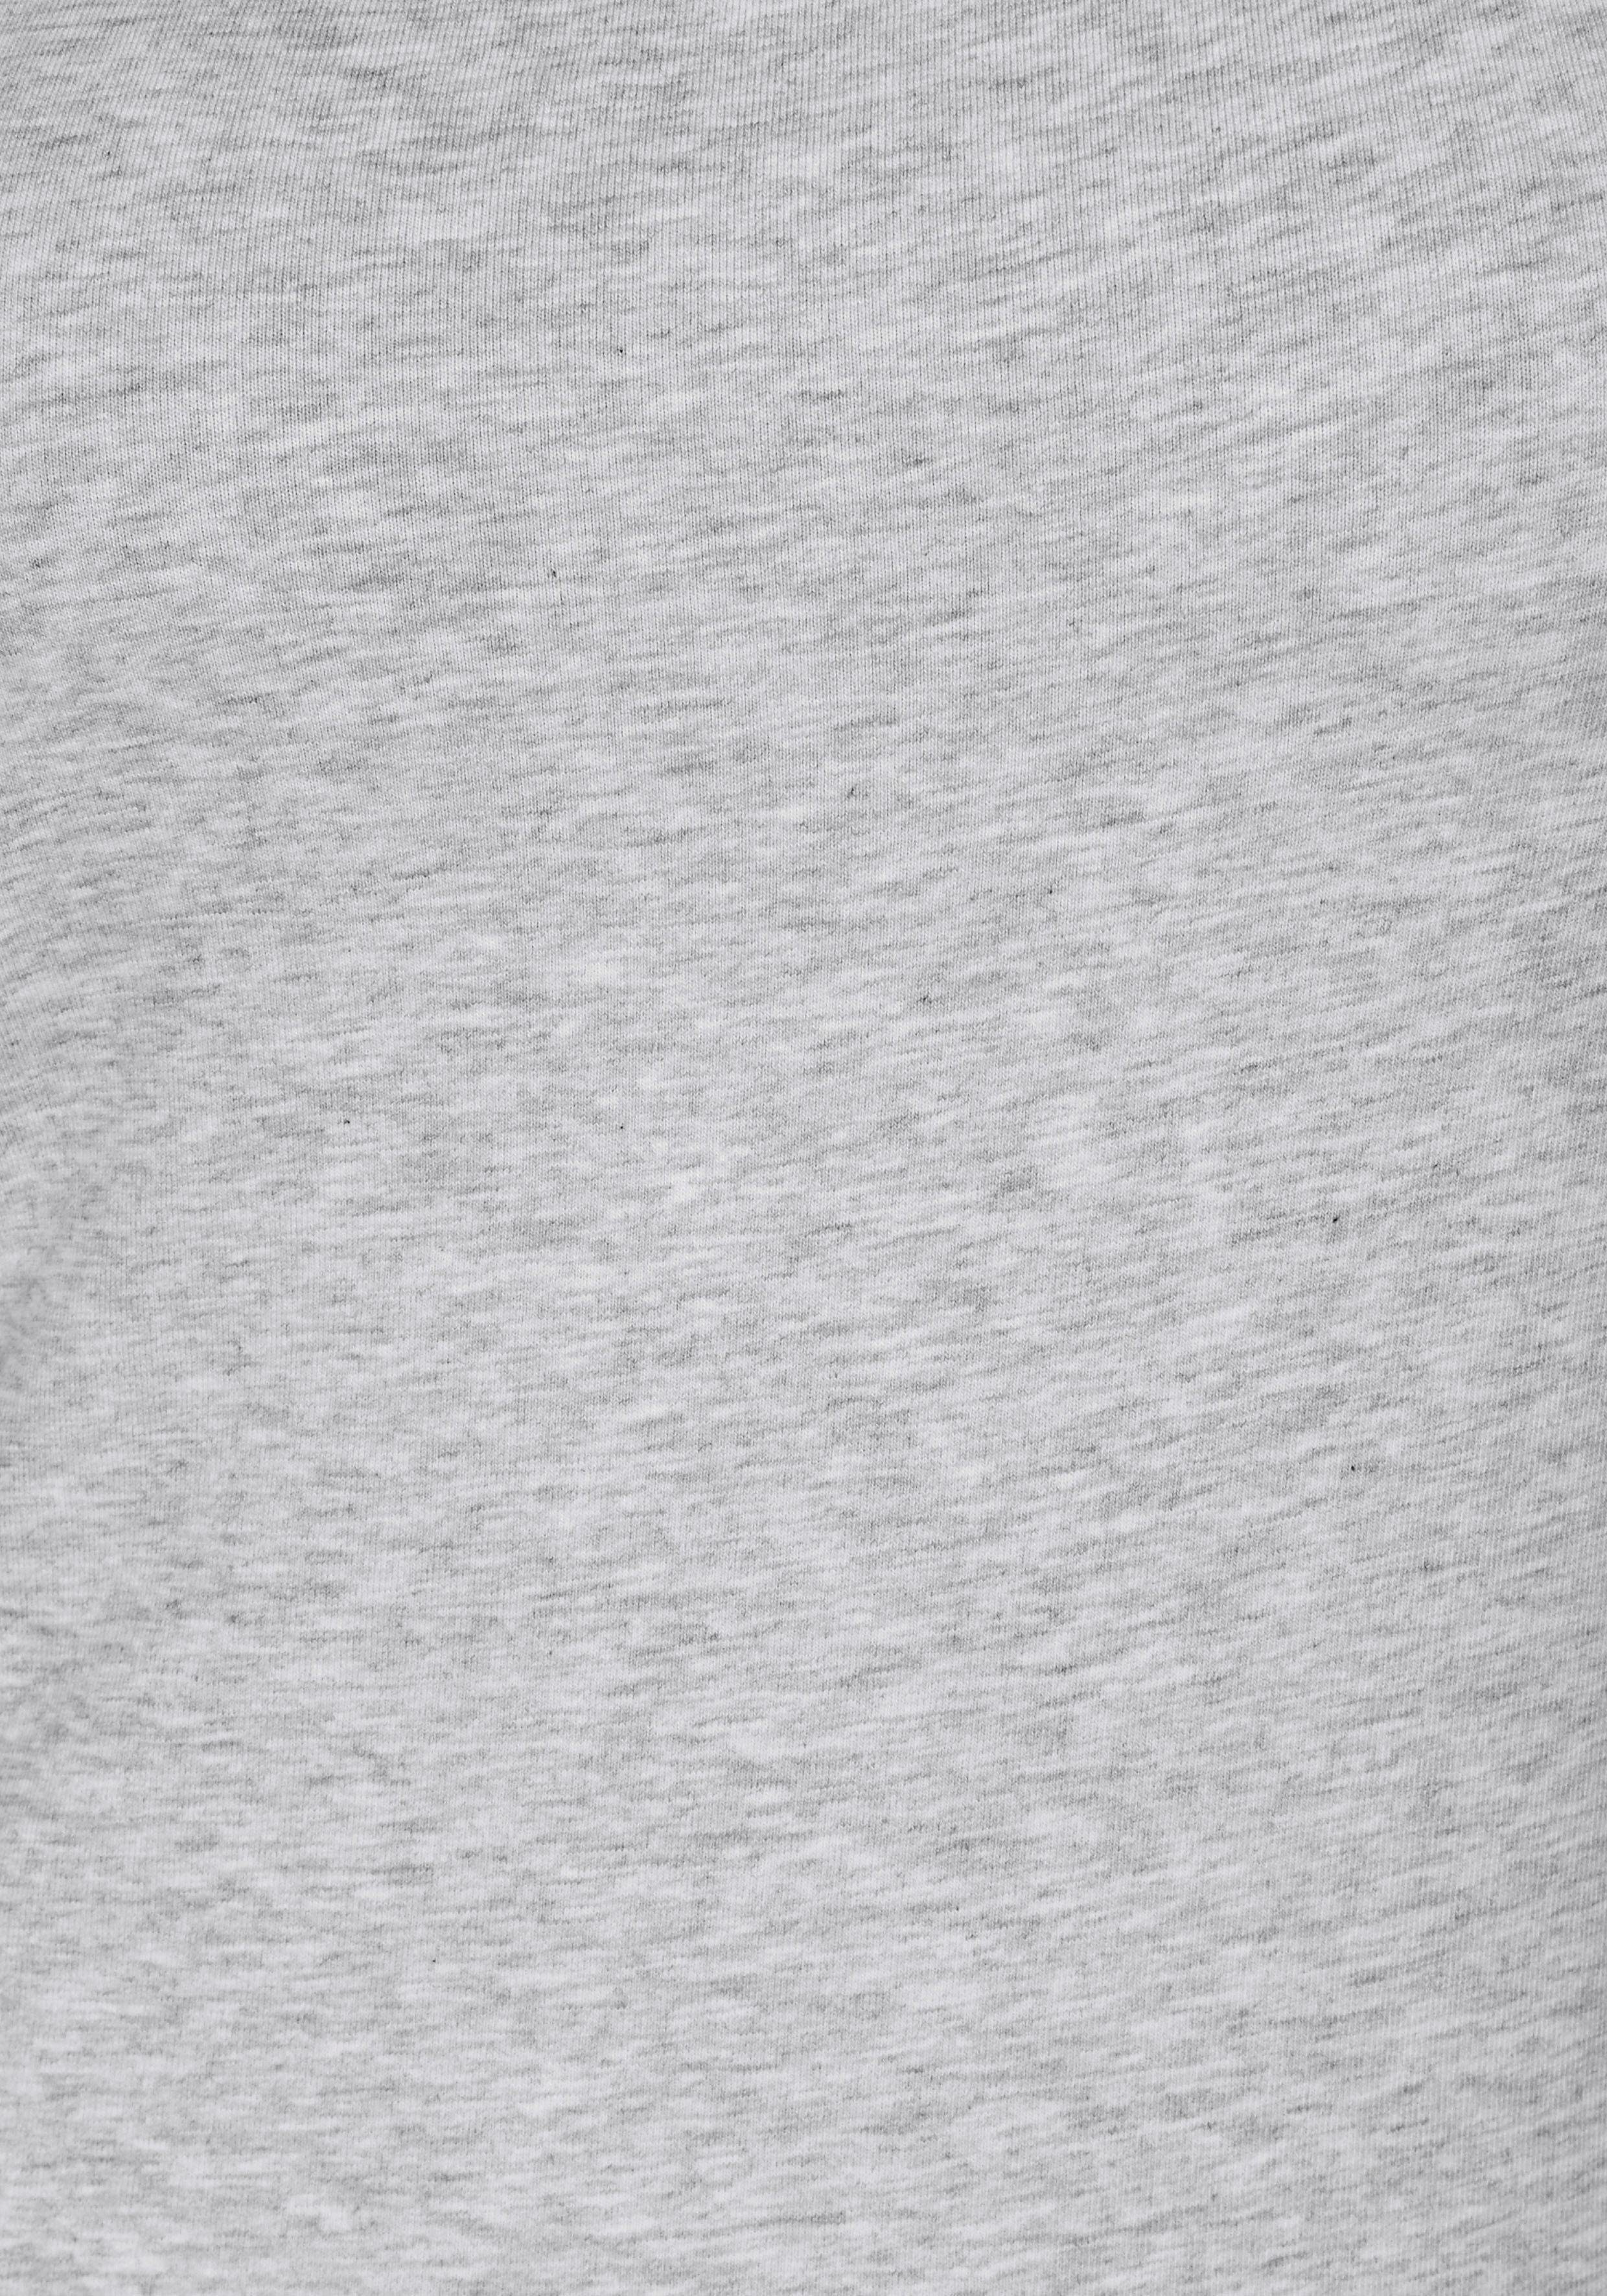 H.I.S Unterhemd (2er-Pack) aus Unterziehshirt Spaghettiträger-Top, Baumwoll-Qualität, grau-meliert, elastischer schwarz